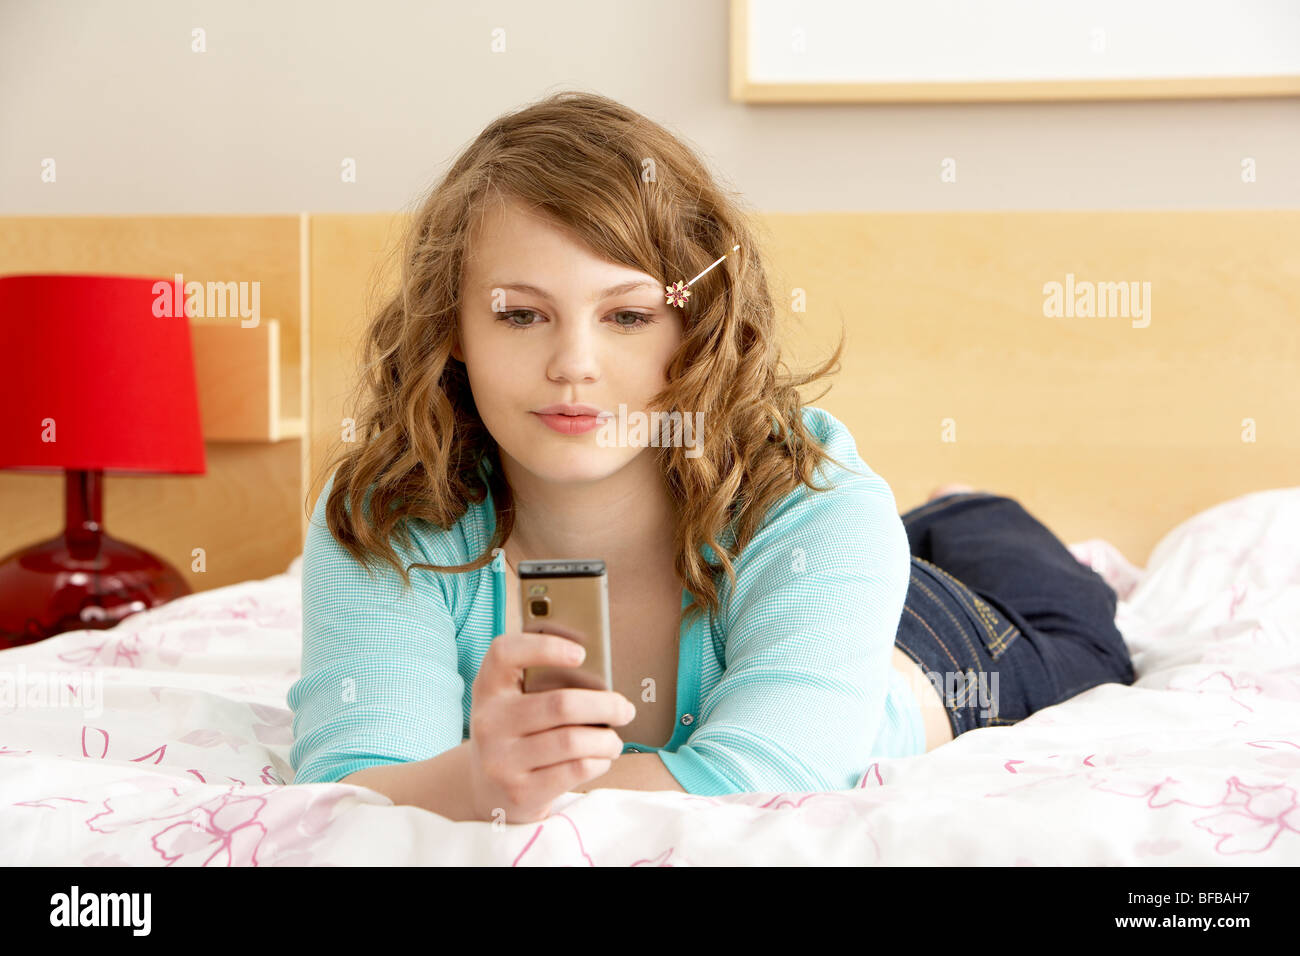 Teenage Girl In Bedroom With Mobile Phone Stock Photo